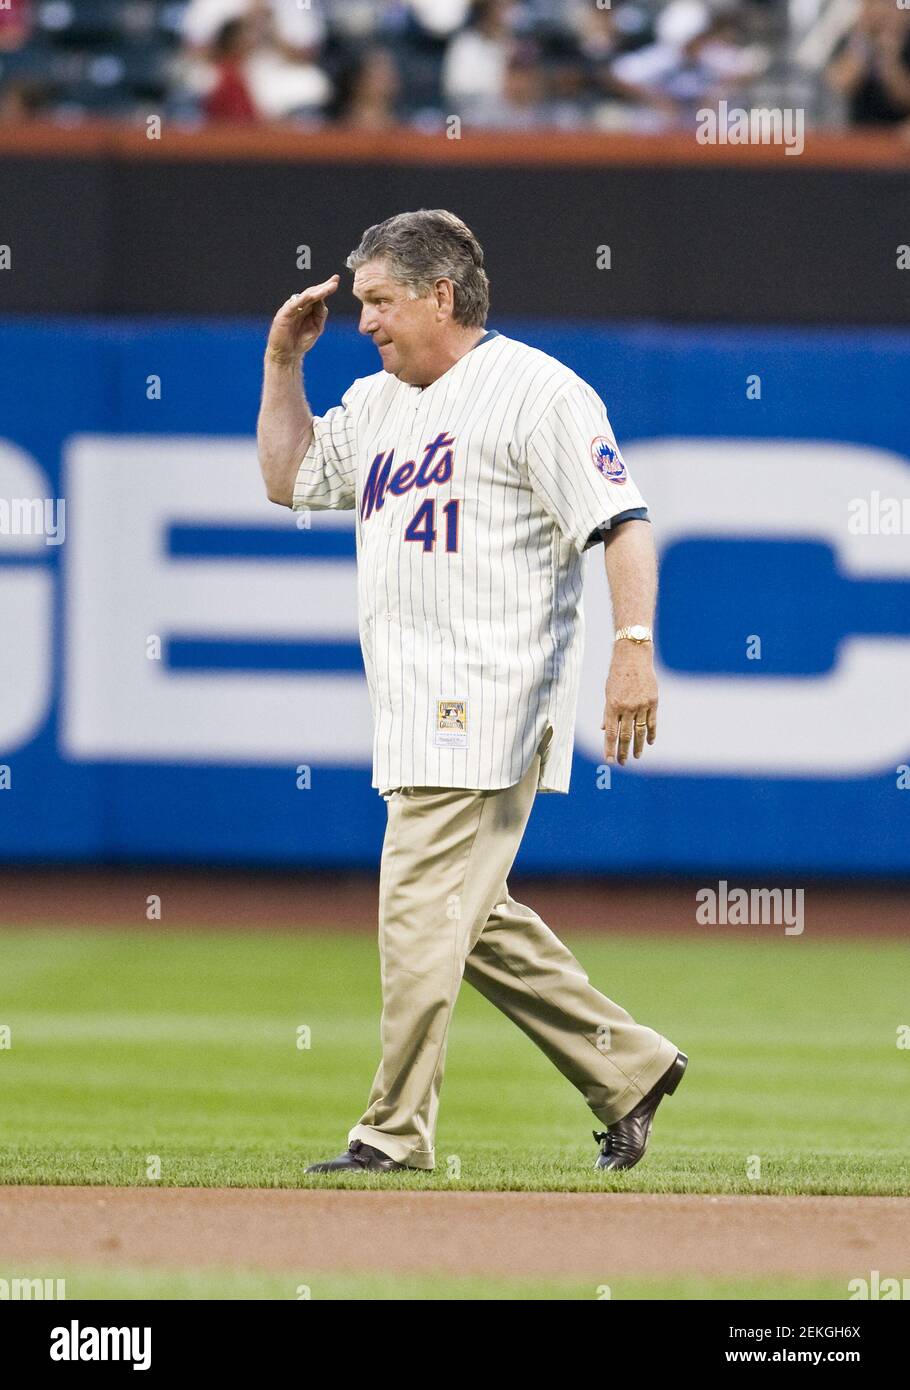 Legendary Mets pitcher Tom Seaver dies at 75